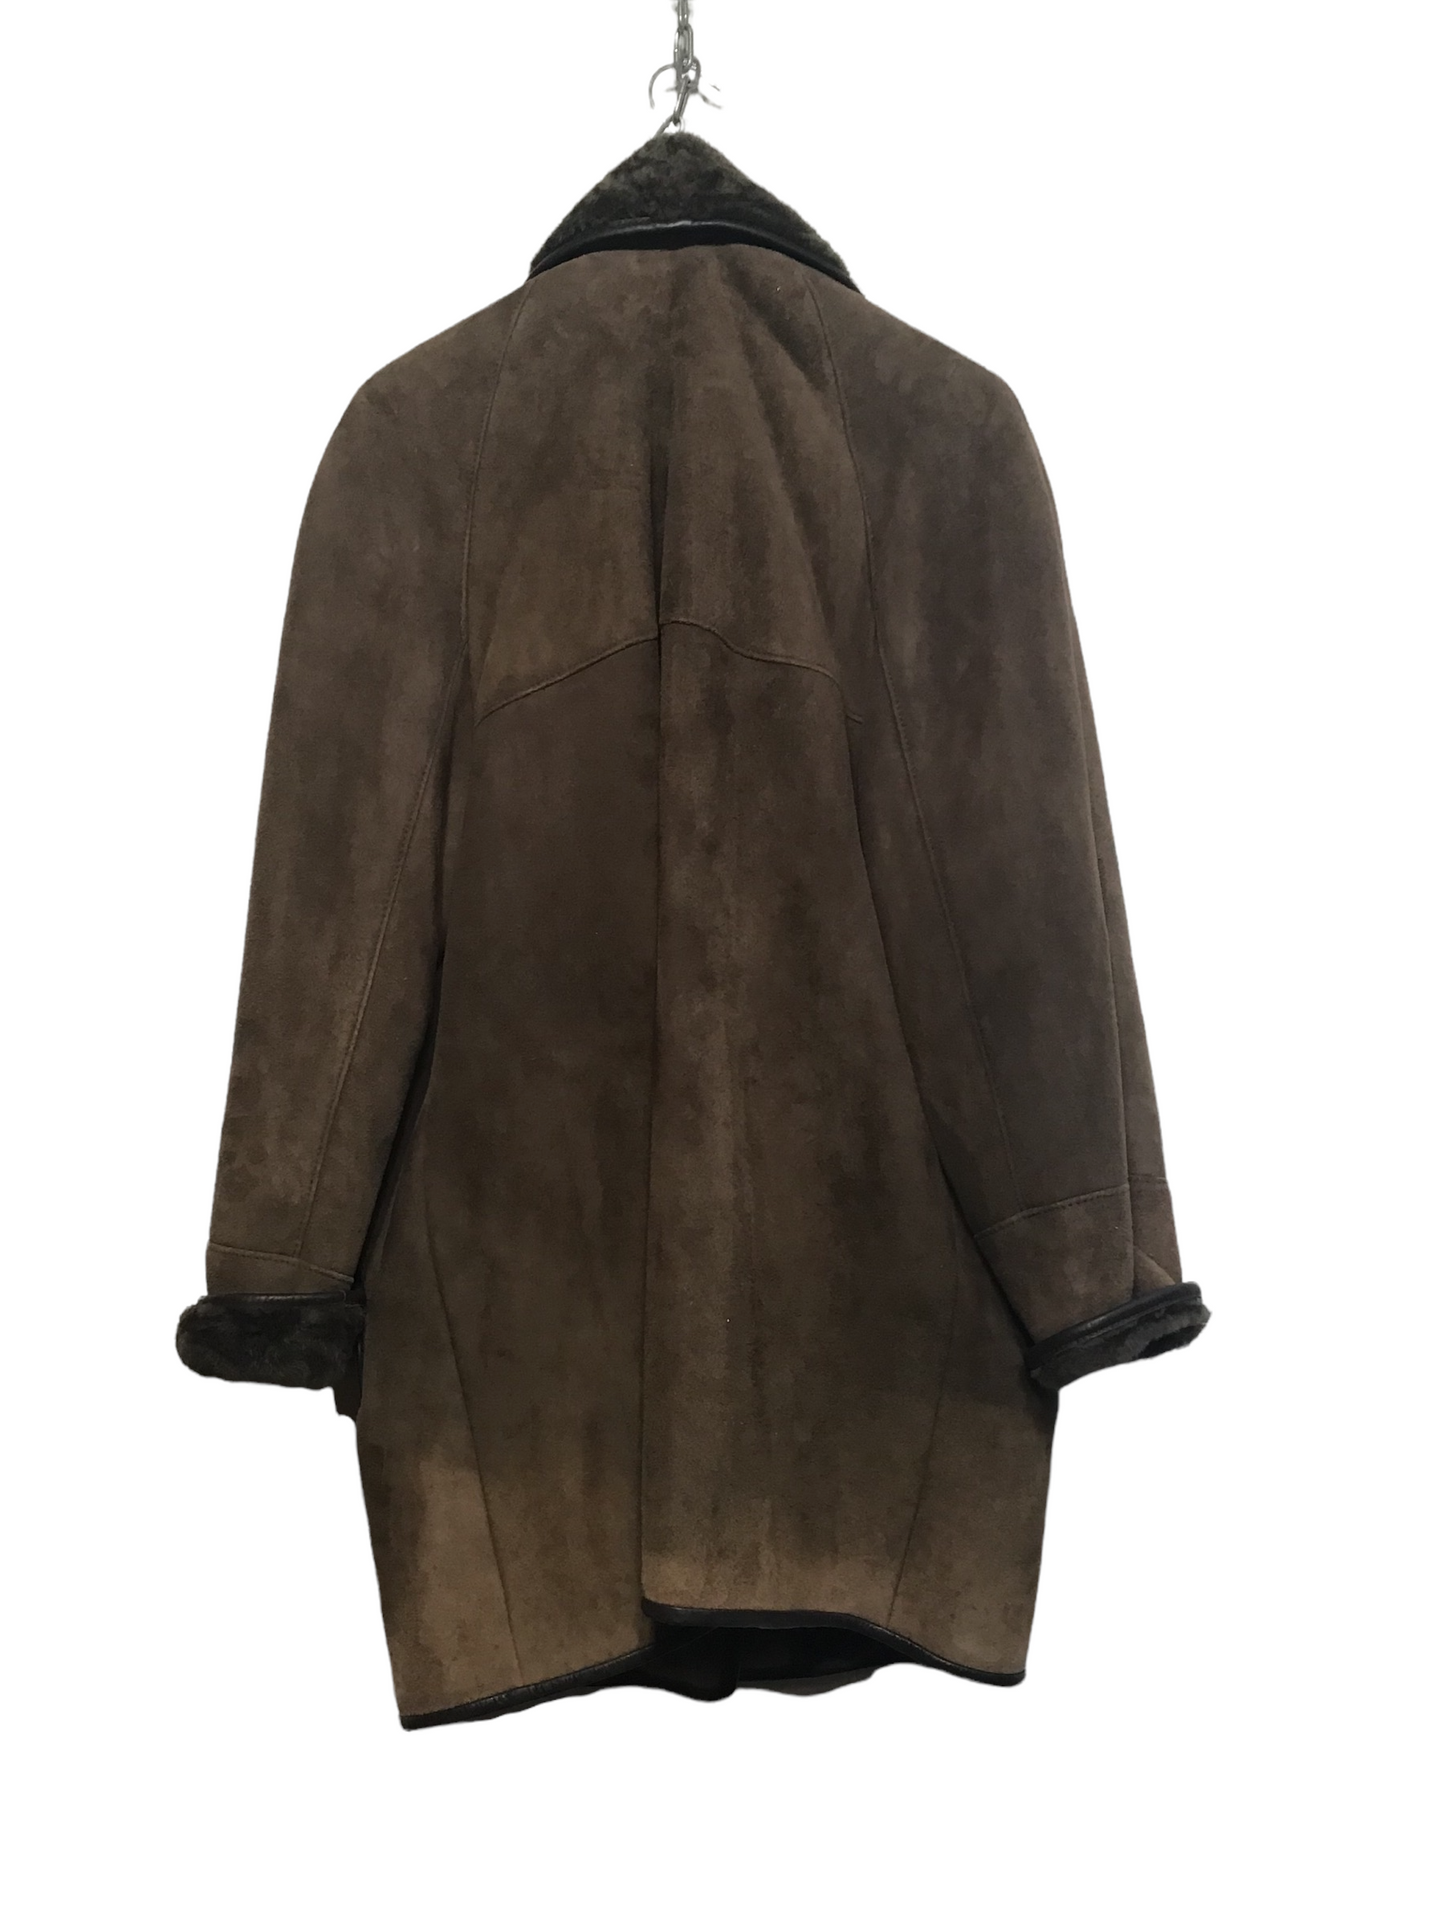 Brown Shearling Long Jacket (Size L)